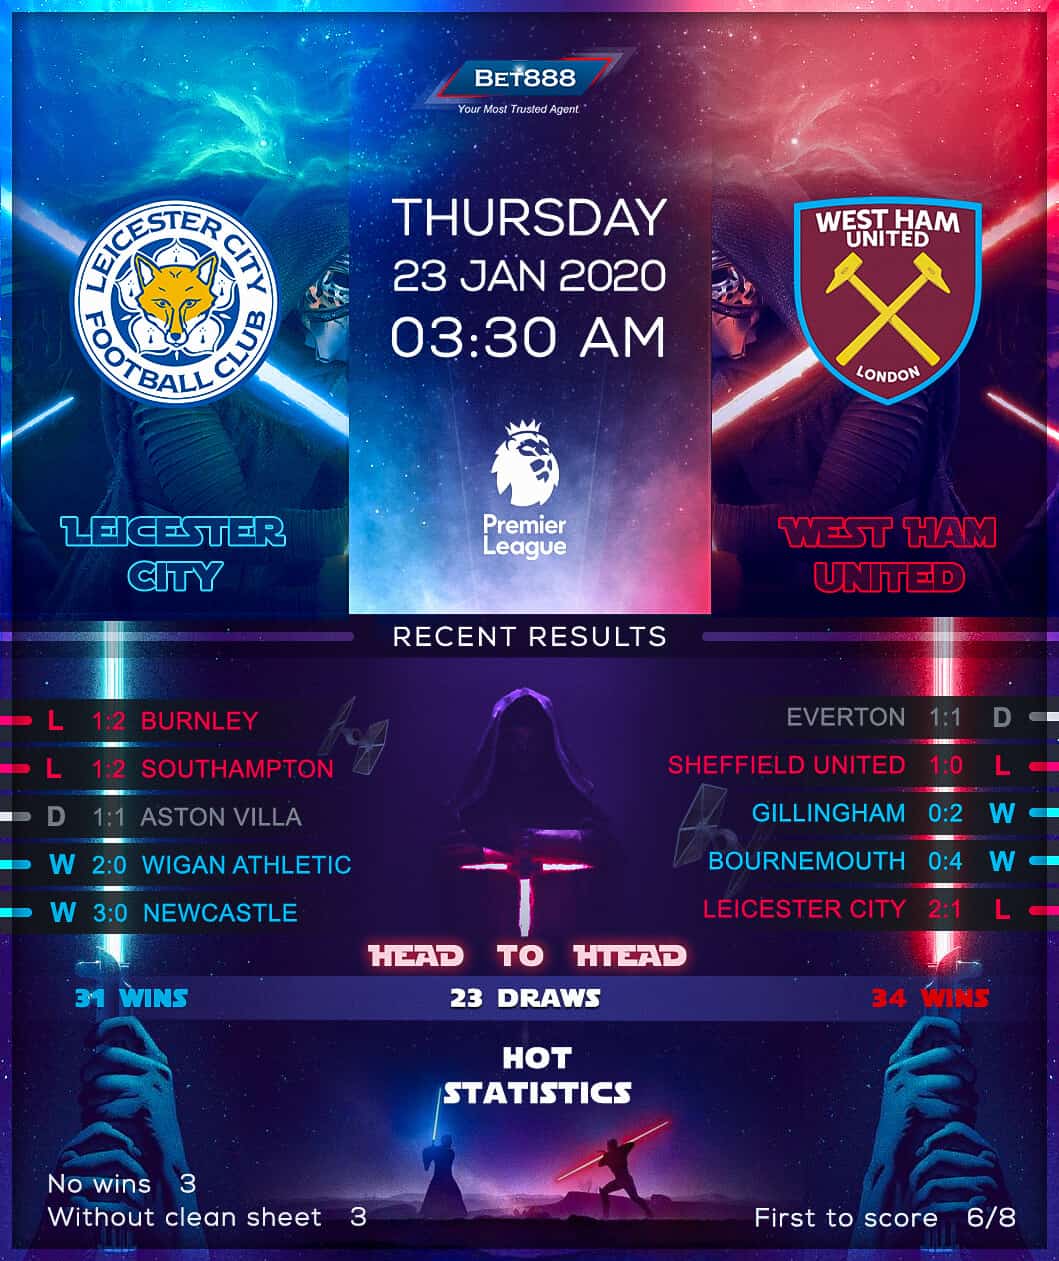 Leicester City vs West Ham United 23/01/20